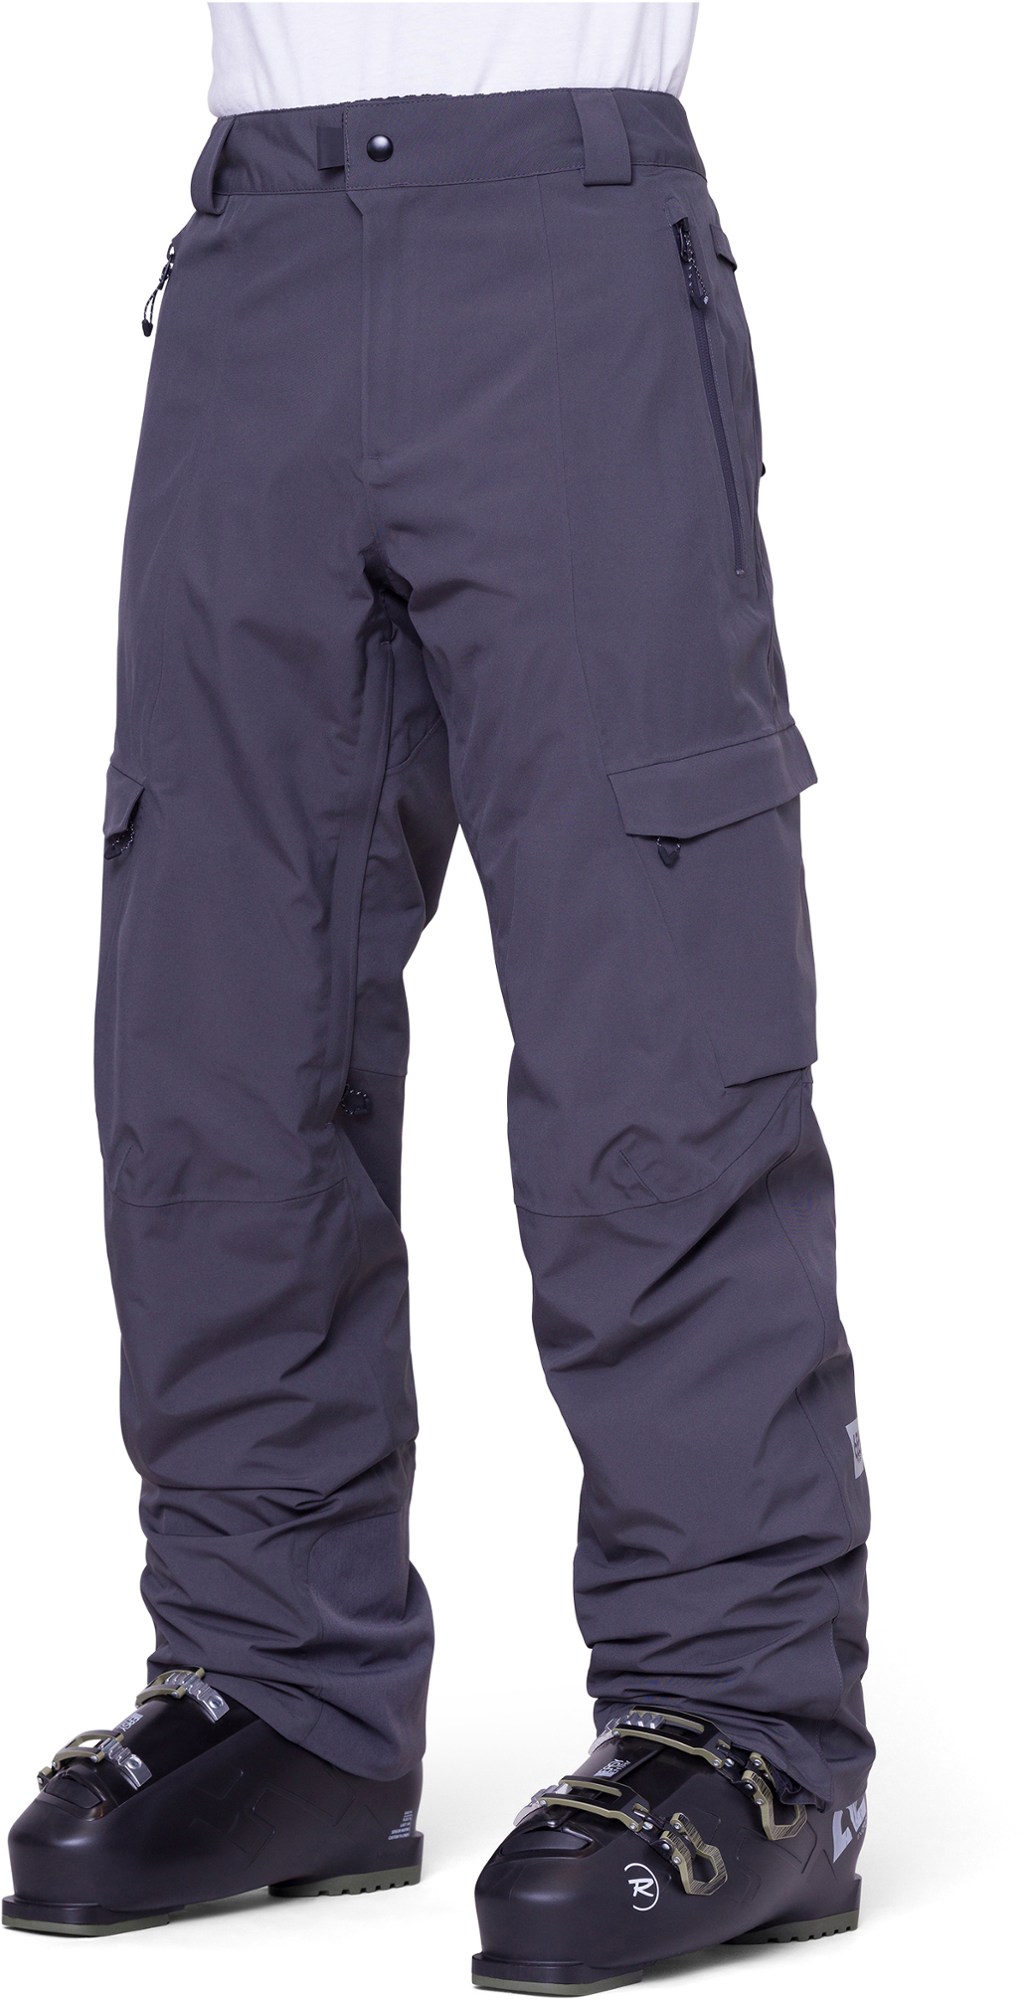 Снежные брюки GLCR Quantum Thermagraph — мужские 686, серый цена и фото